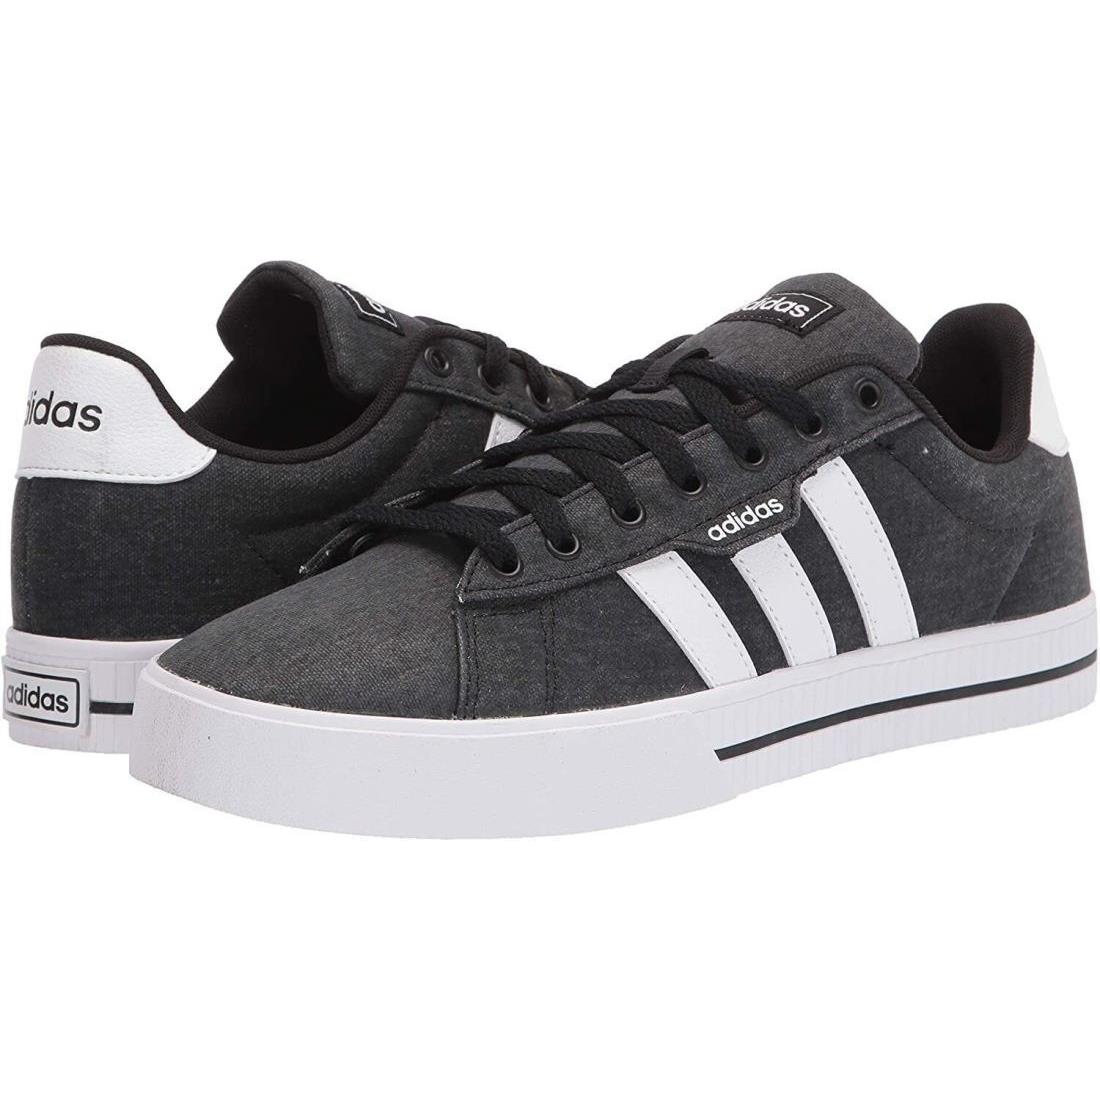 Man Adidas Daily 3.0 Skate Lace Up Shoe FW7033 Color Black/white - Black/White